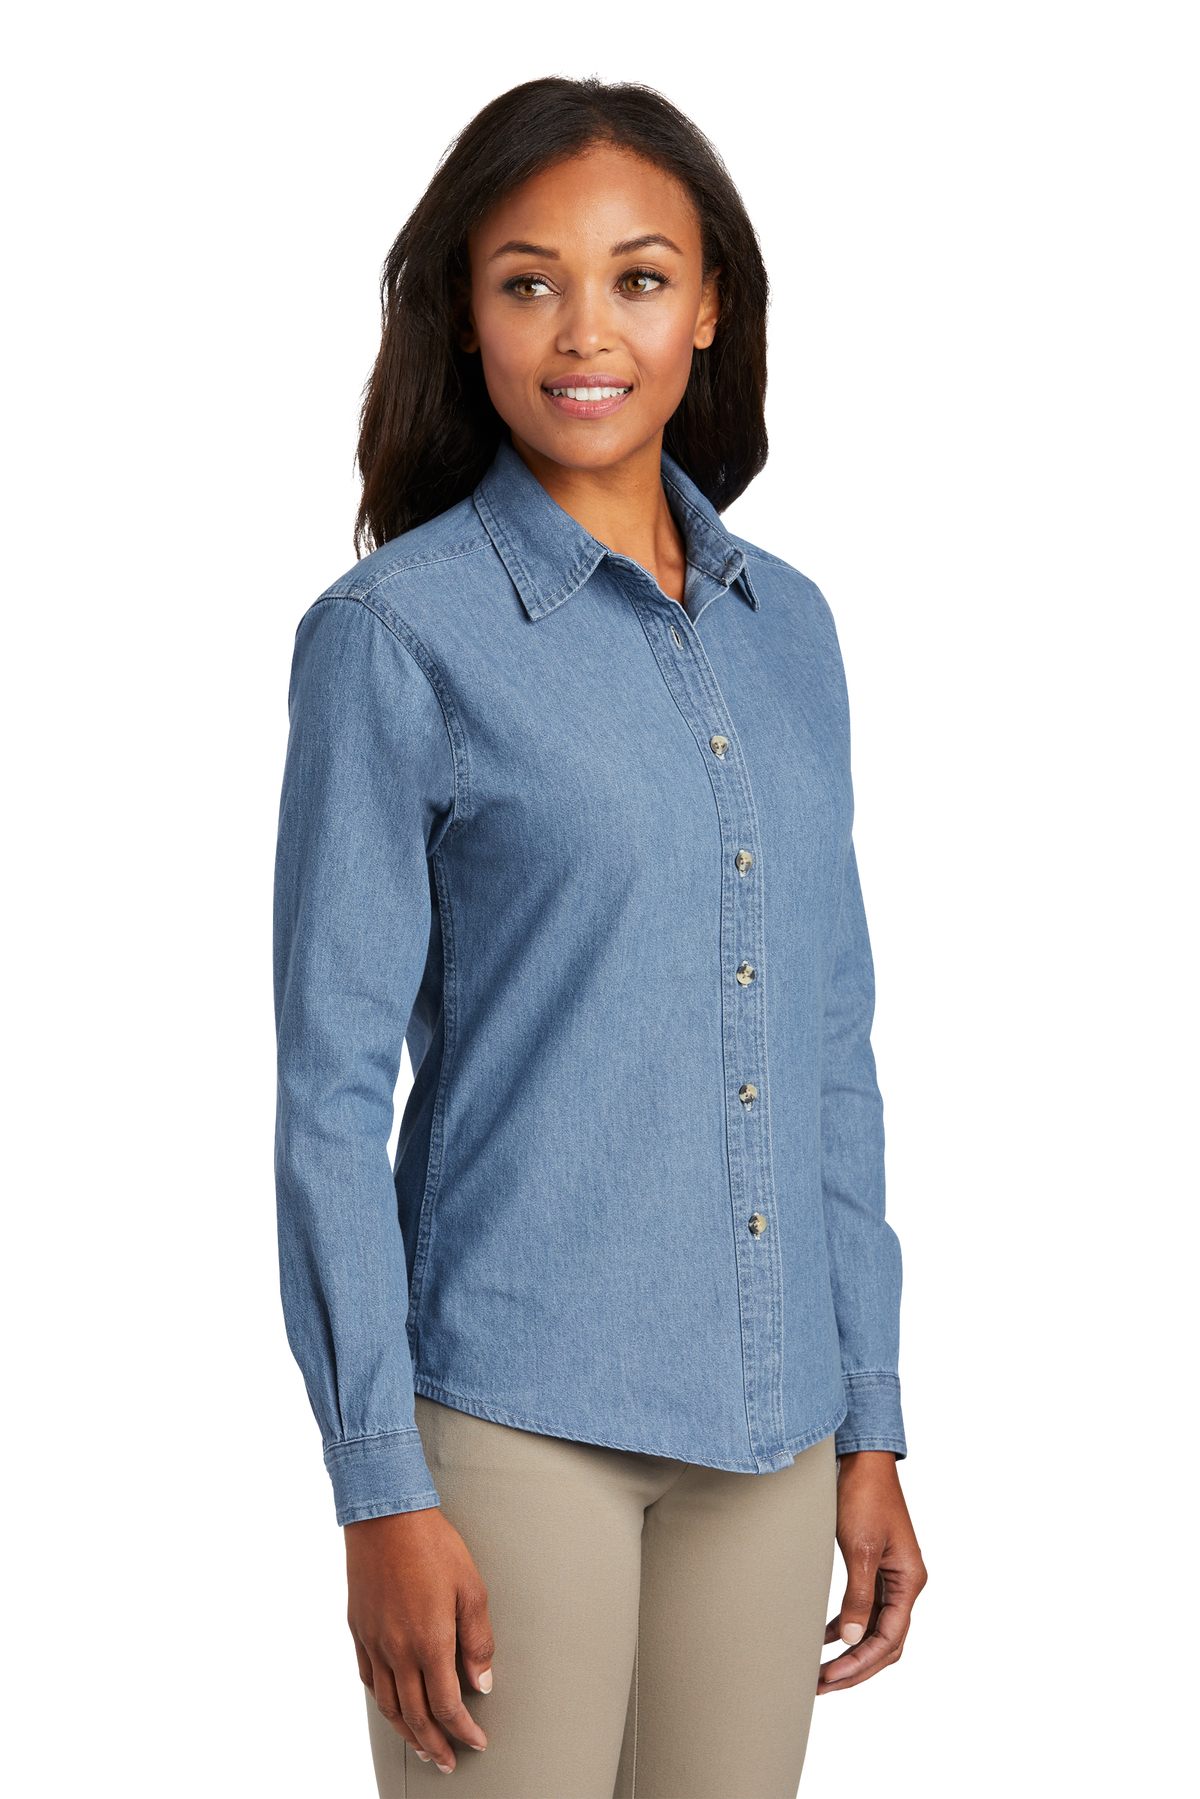 Port & Company - Ladies Long Sleeve Value Denim Shirt | Product ...